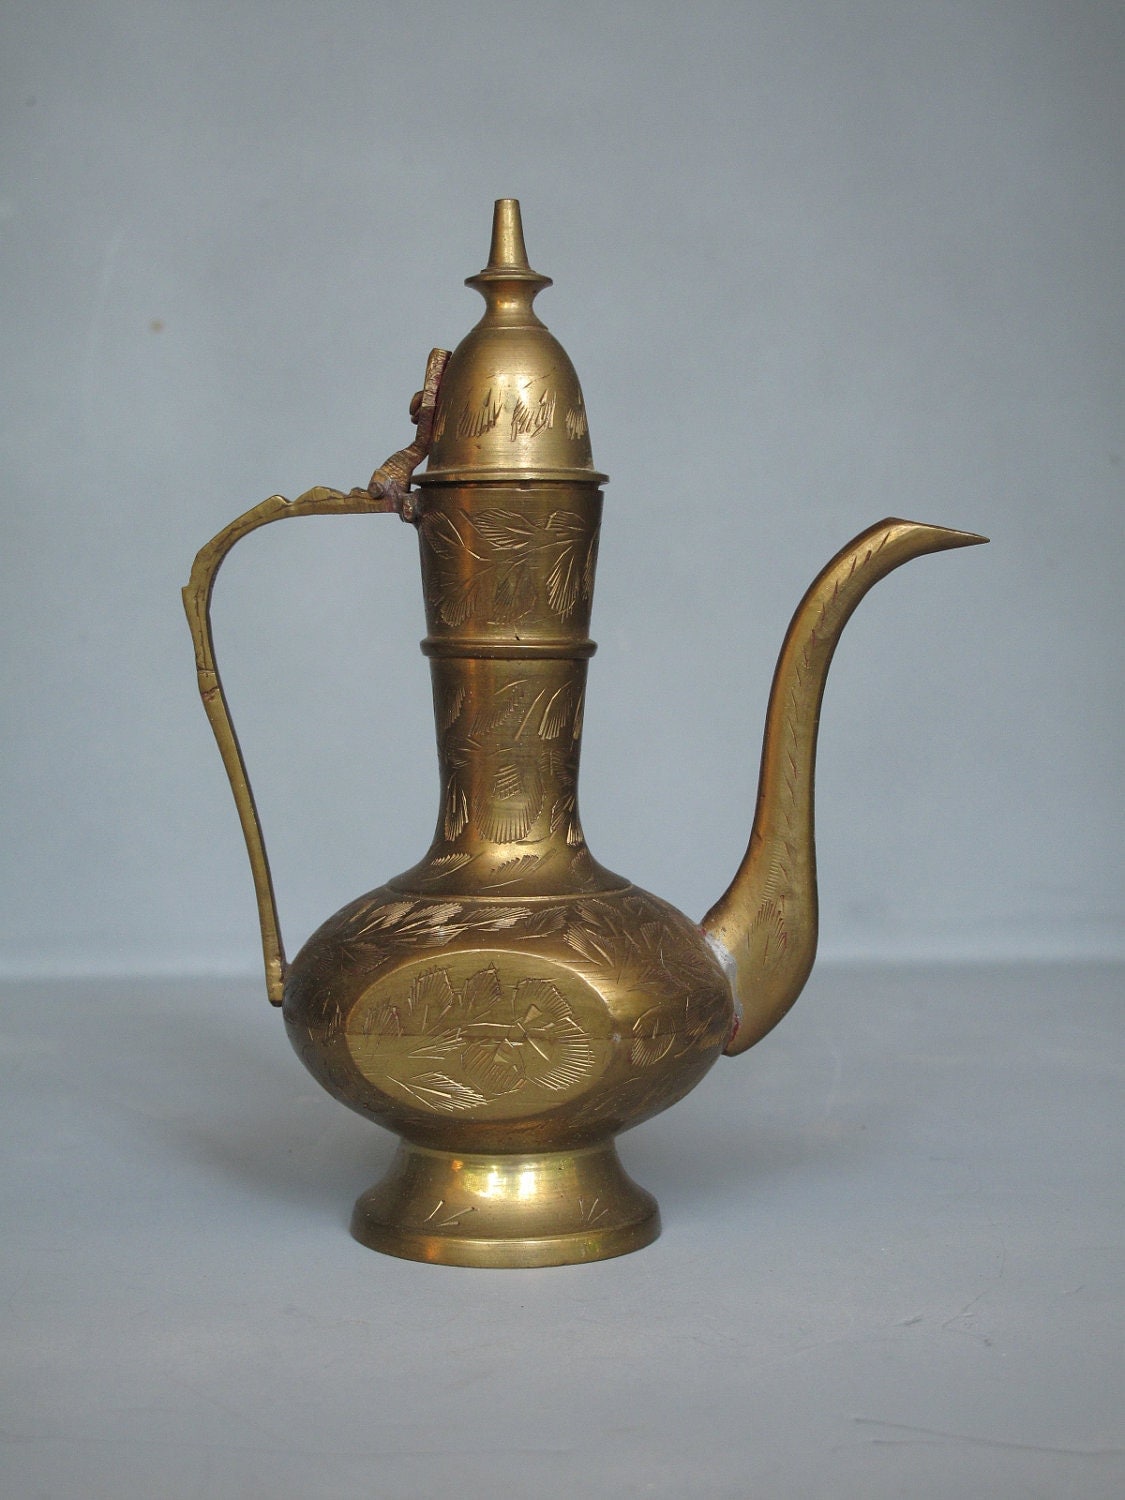 Vintage Miniature Brass Teapot / Moroccan Style Decorative